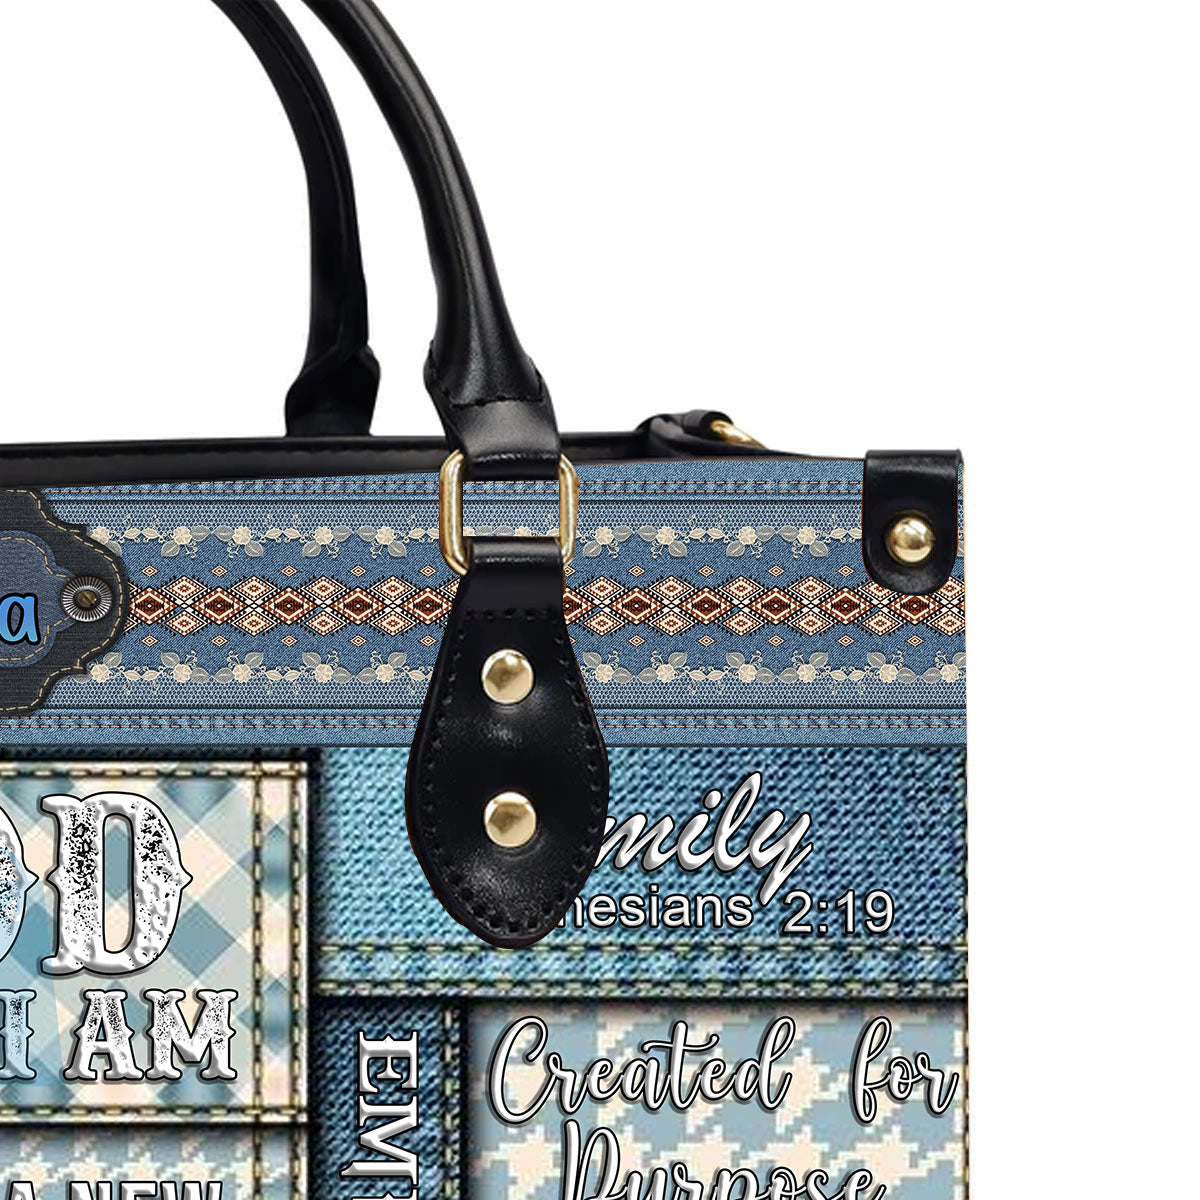 Christianartbag Handbags, Vintage Denim God Says I Am Leather Handbag, Personalized Bags, Gifts for Women, Christmas Gift, CABLTB01110923. - Christian Art Bag